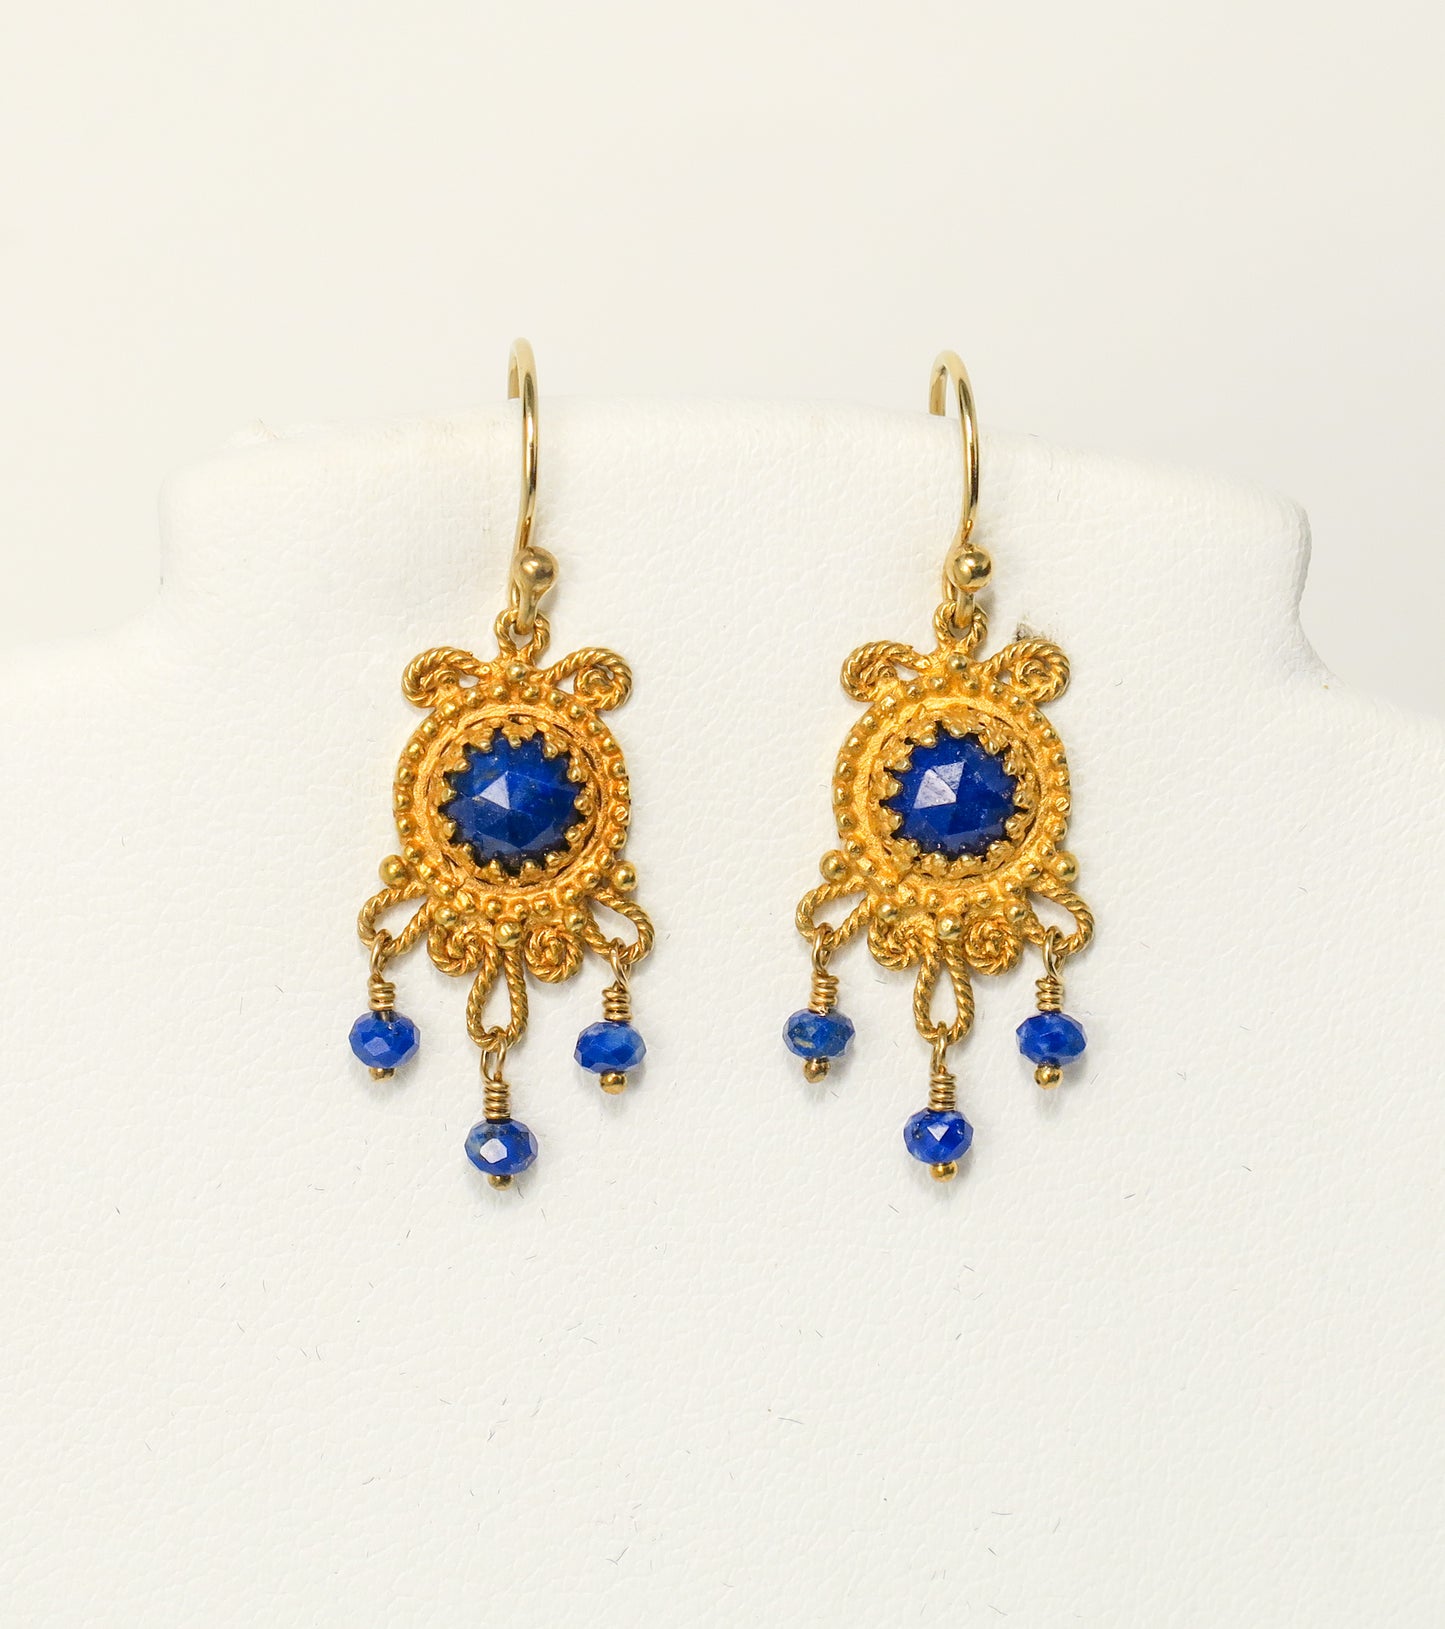 18K Gold Vermeil and Lapis Lazuli Earrings | by Vanessa Mellet